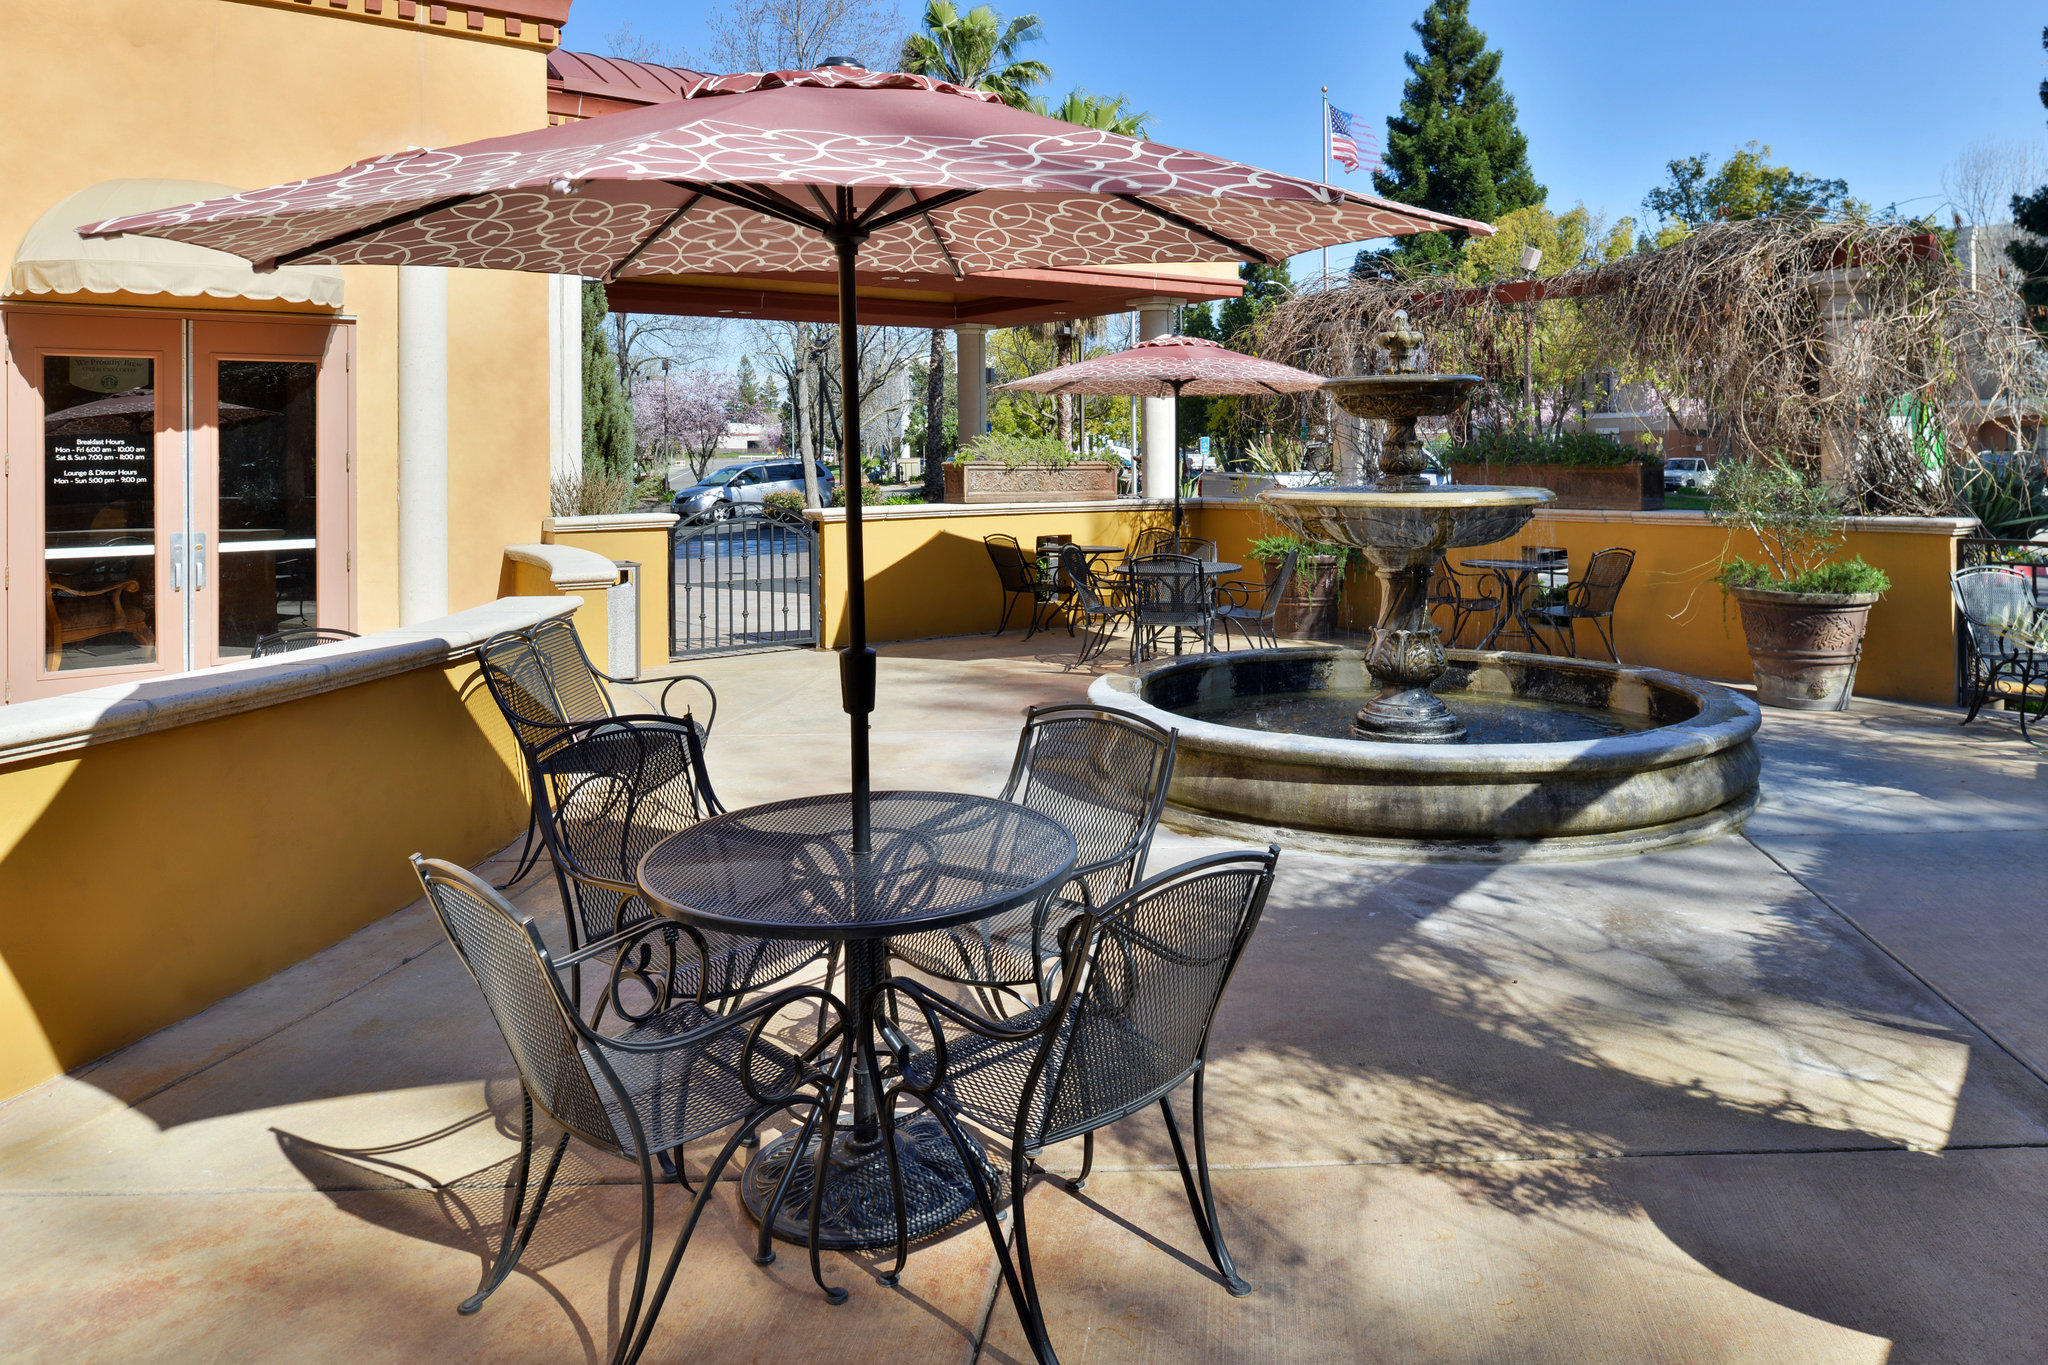 Holiday Inn Sacramento Rancho Cordova Photo